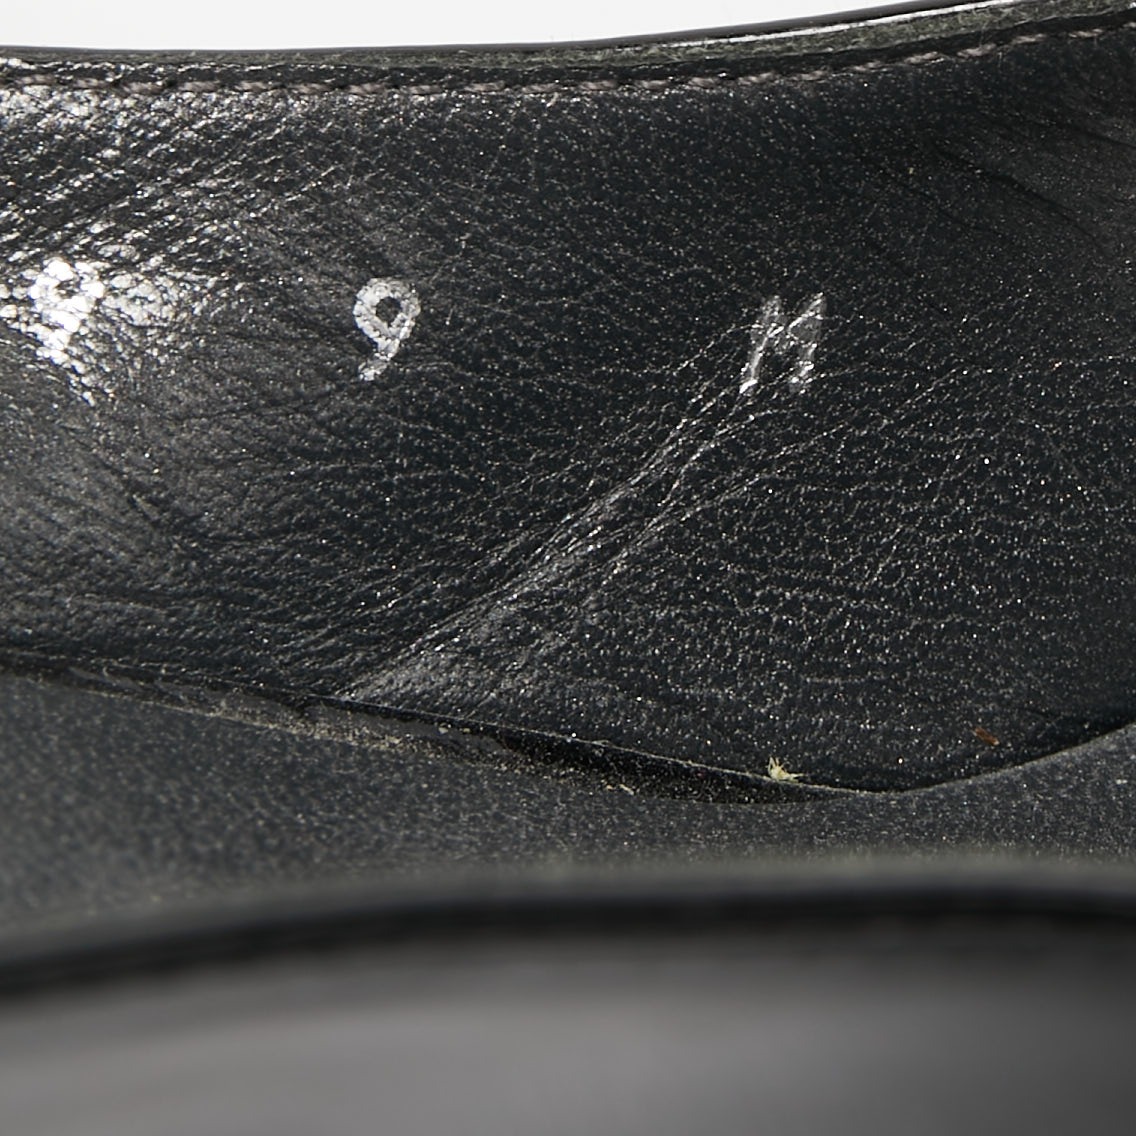 Stuart Weitzman Black Patent Leather Slingback Pumps Size 39.5